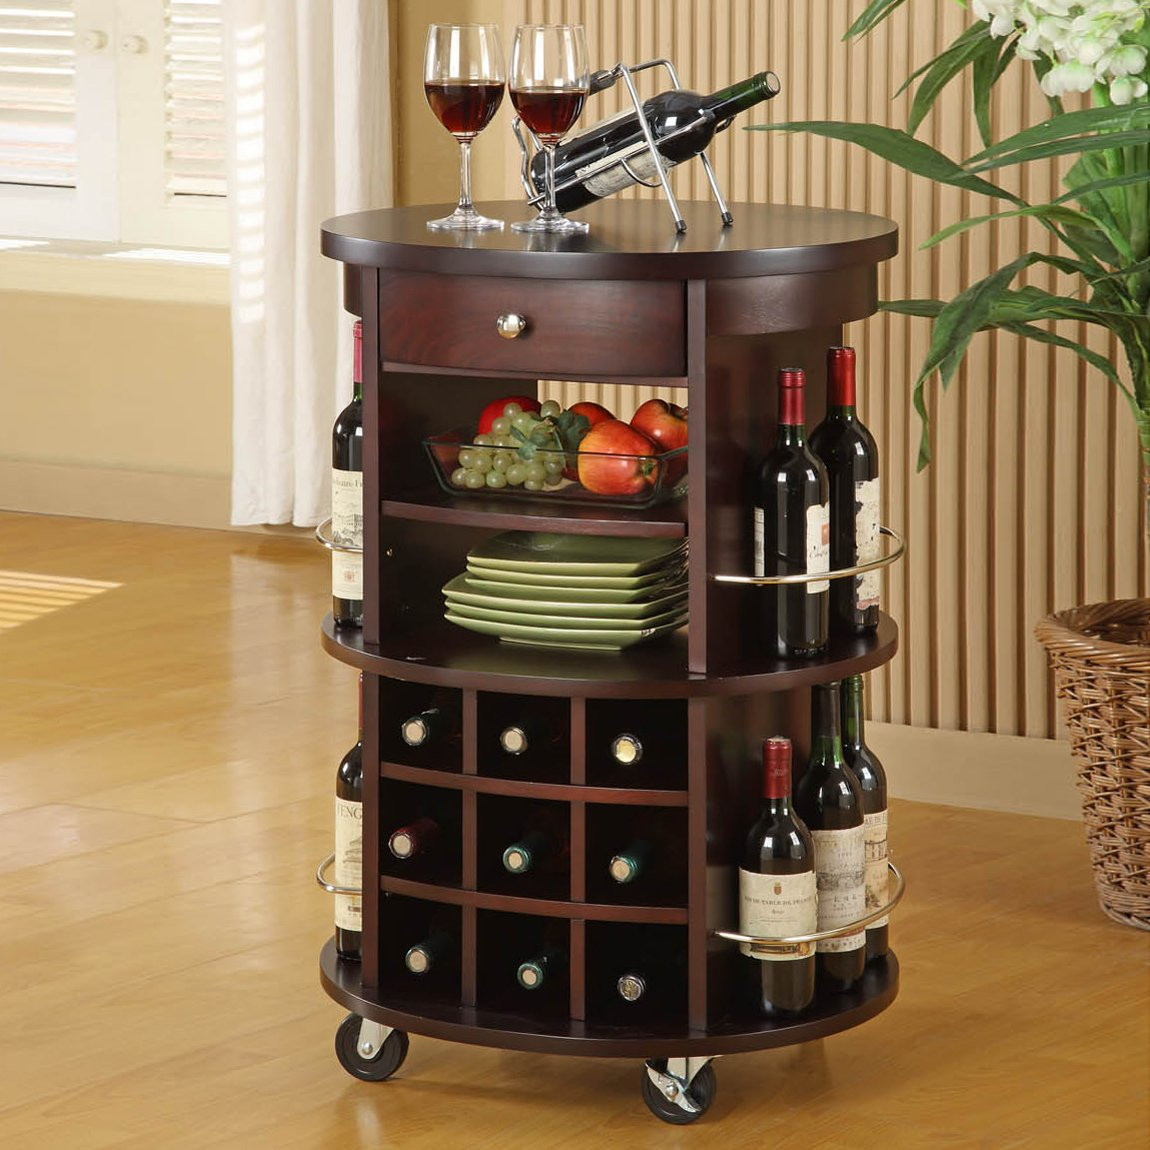 Best ideas about Corner Wine Rack Furniture
. Save or Pin Unique Corner Wine Racks Ideas Home Furniture SegoMego Now.